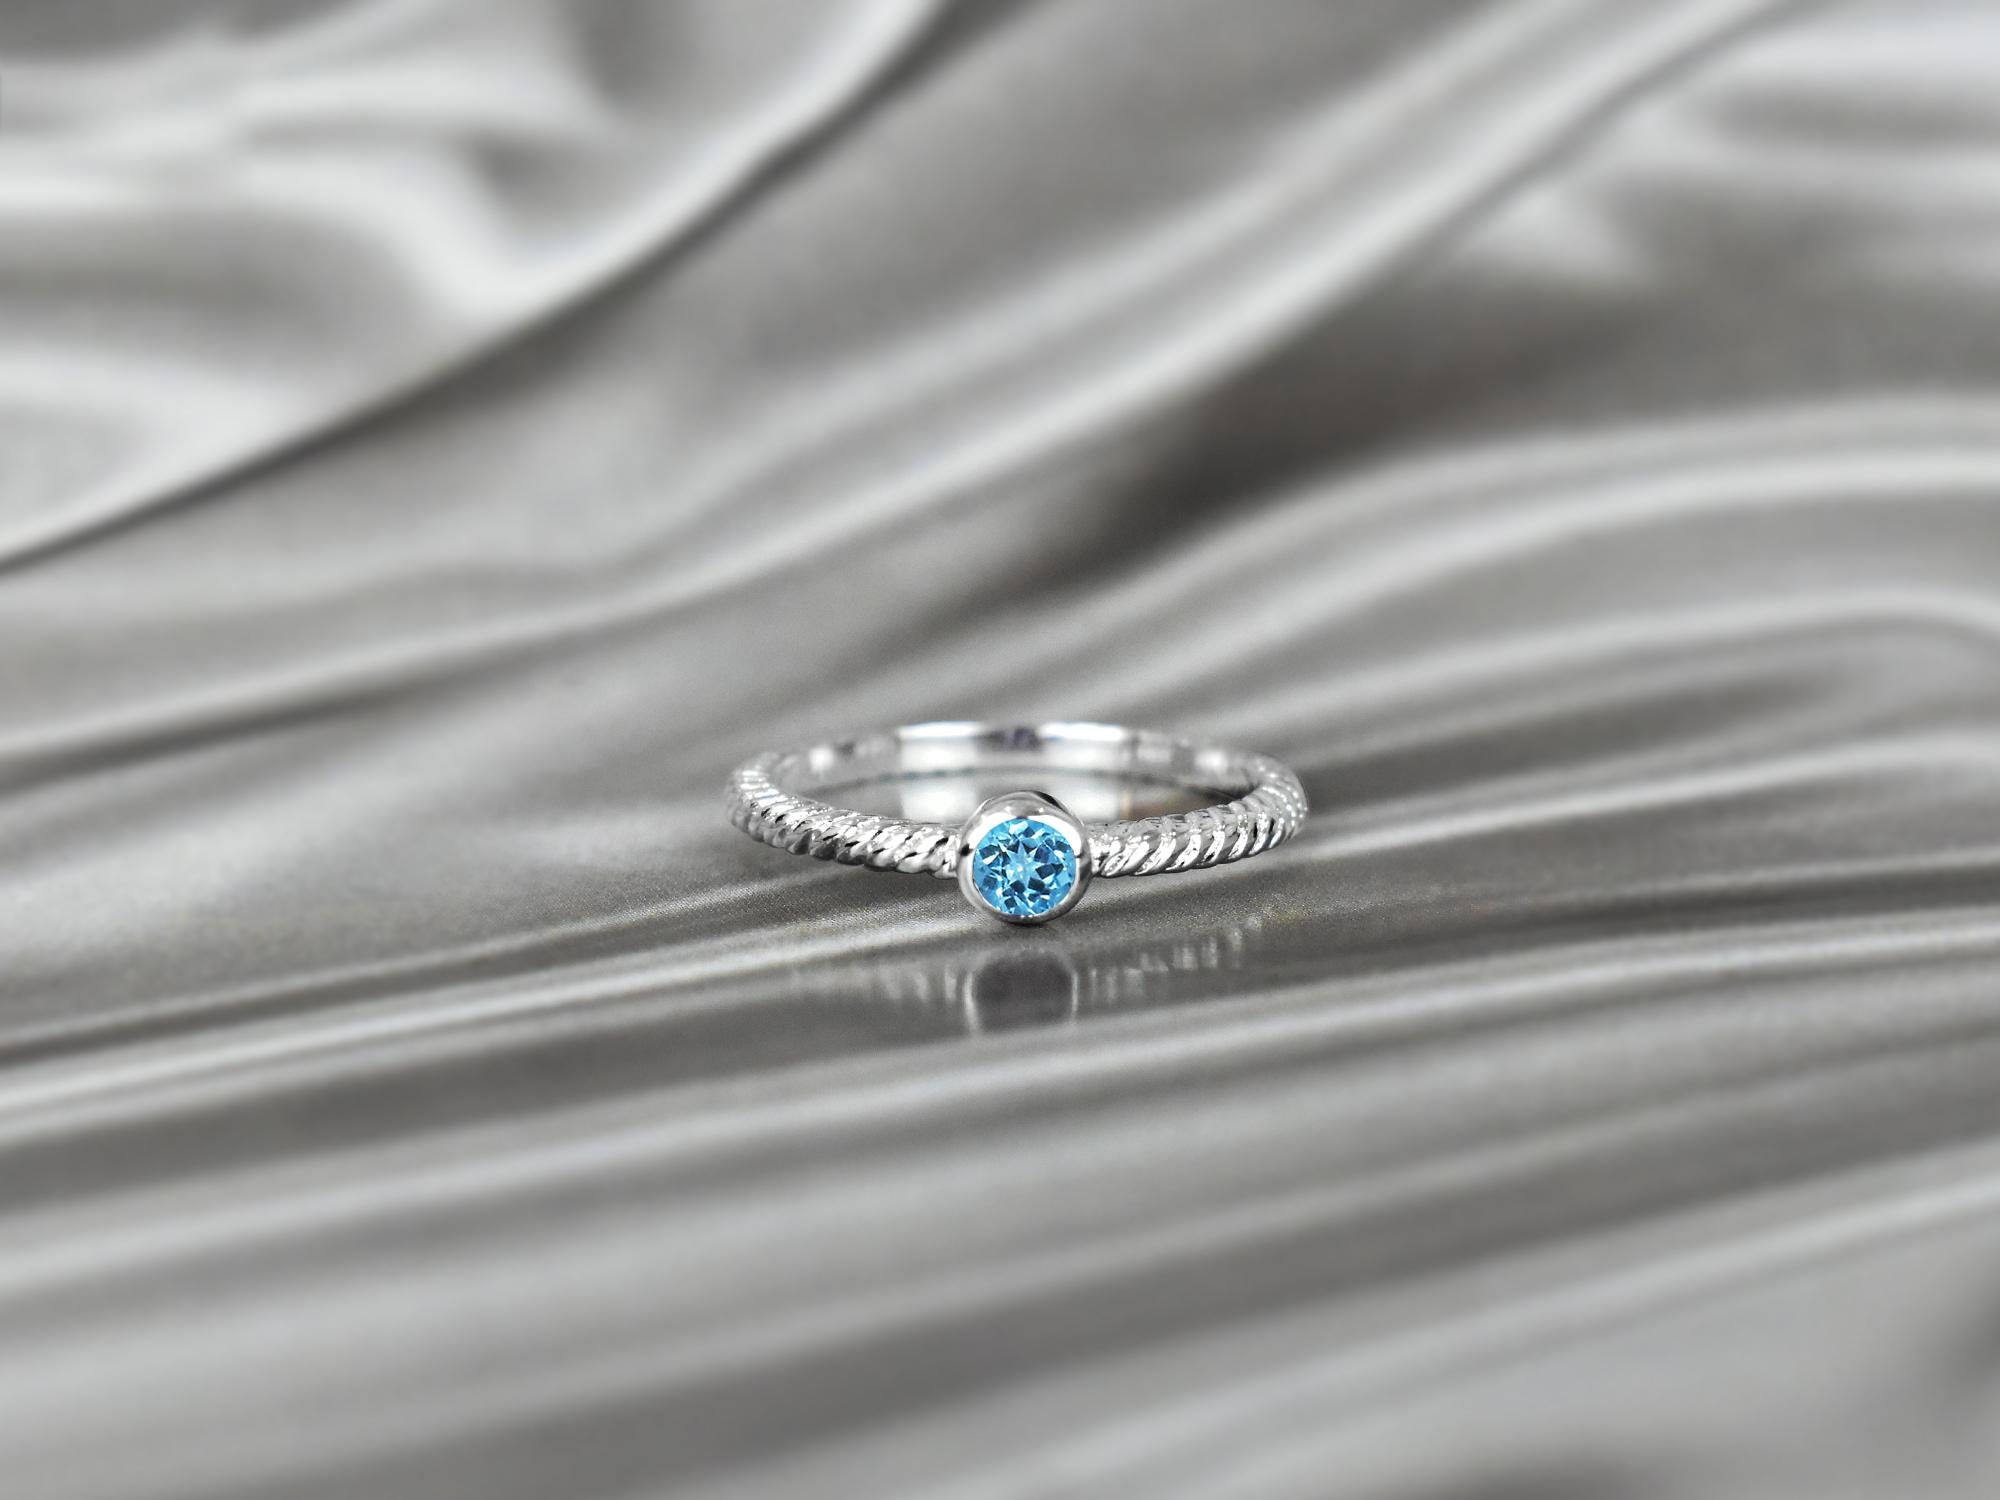 For Sale:  14k Gold Round Gemstone 3.5mm Round Gemstone Ring Birthstone Ring Stackable Ring 8